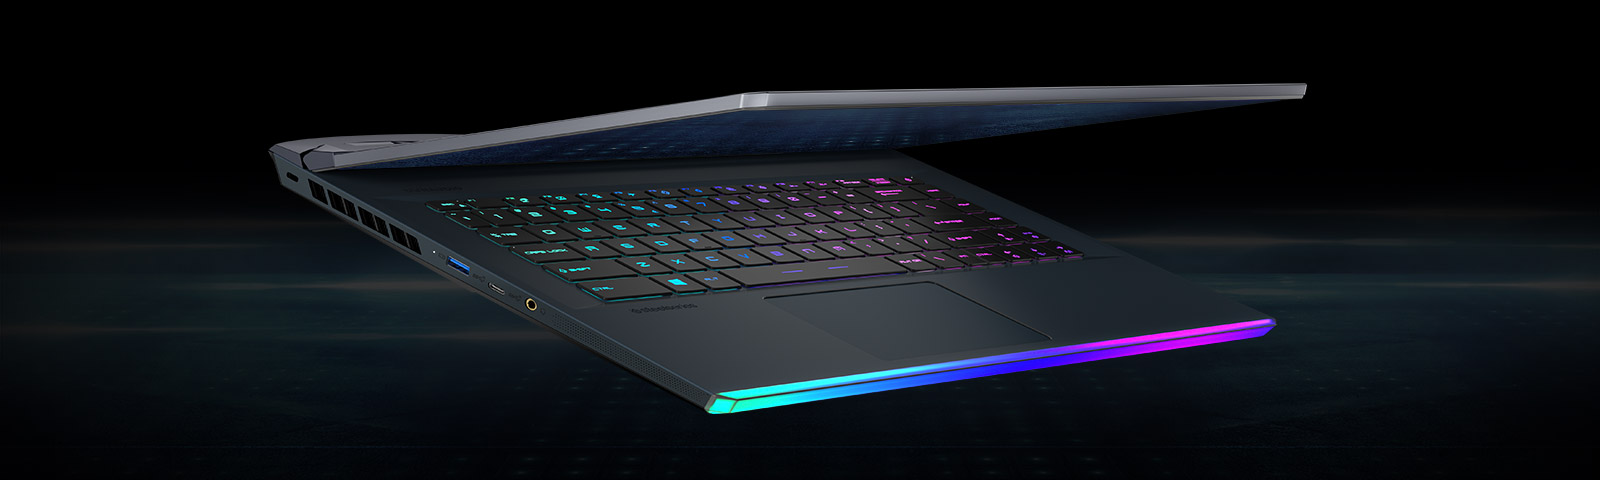 The angle to show RGB backlit keyboard